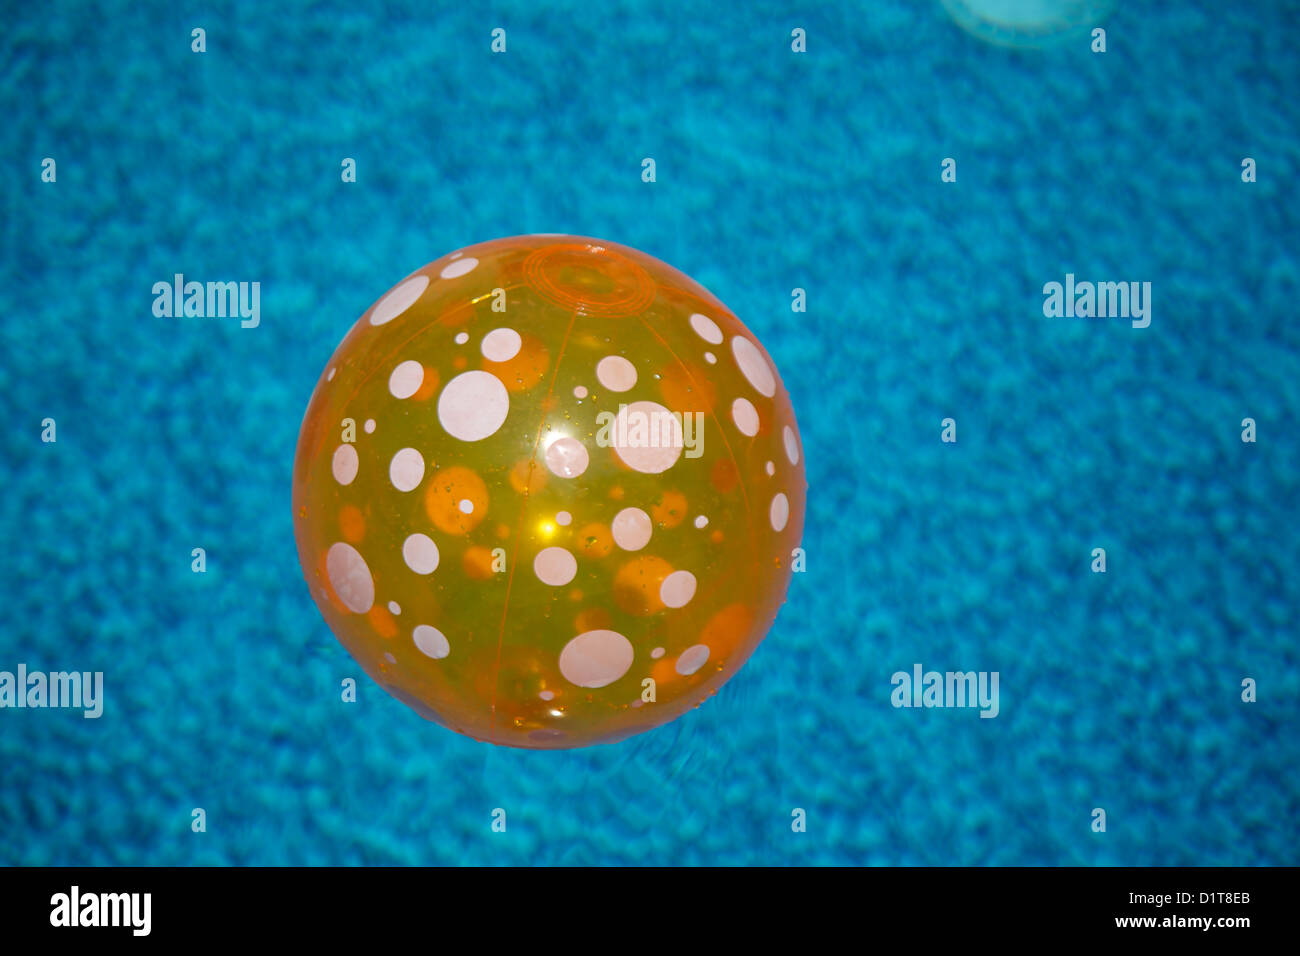 transparent 0range beach ball with white spots Stock Photo